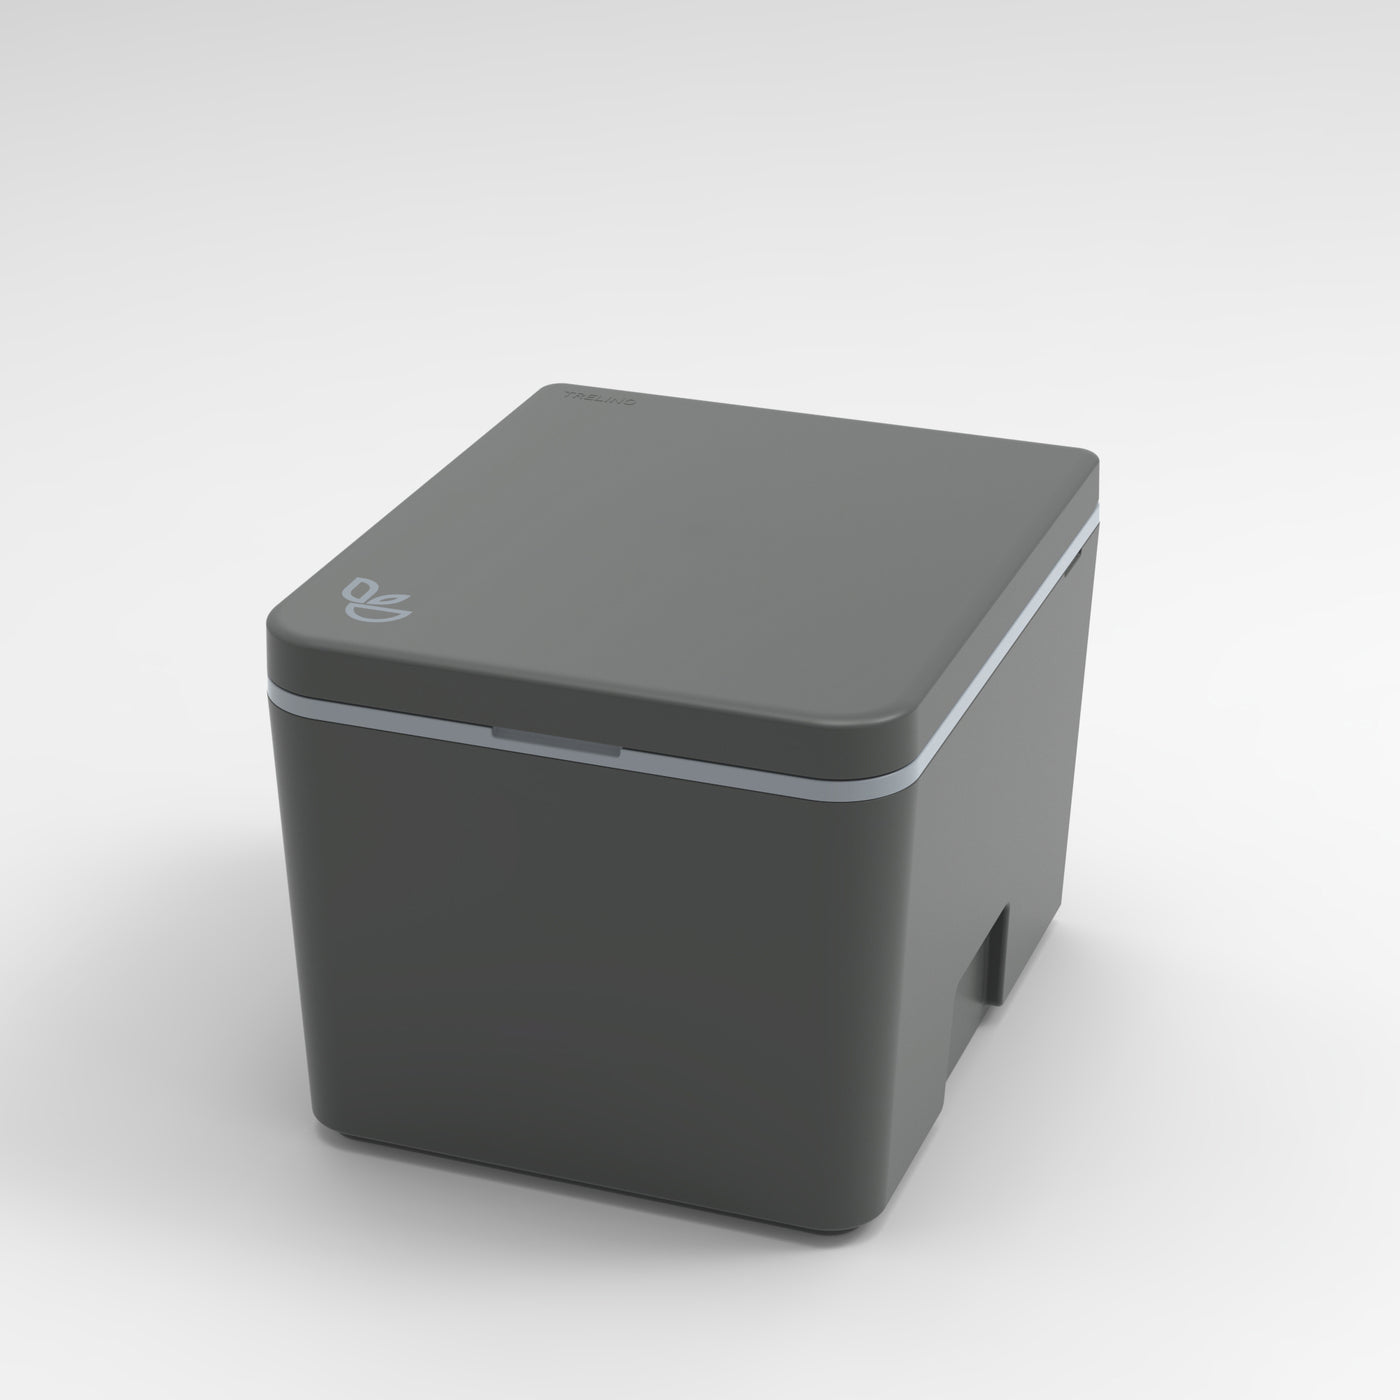 Trelino® Evo S • Portable Composting Toilet